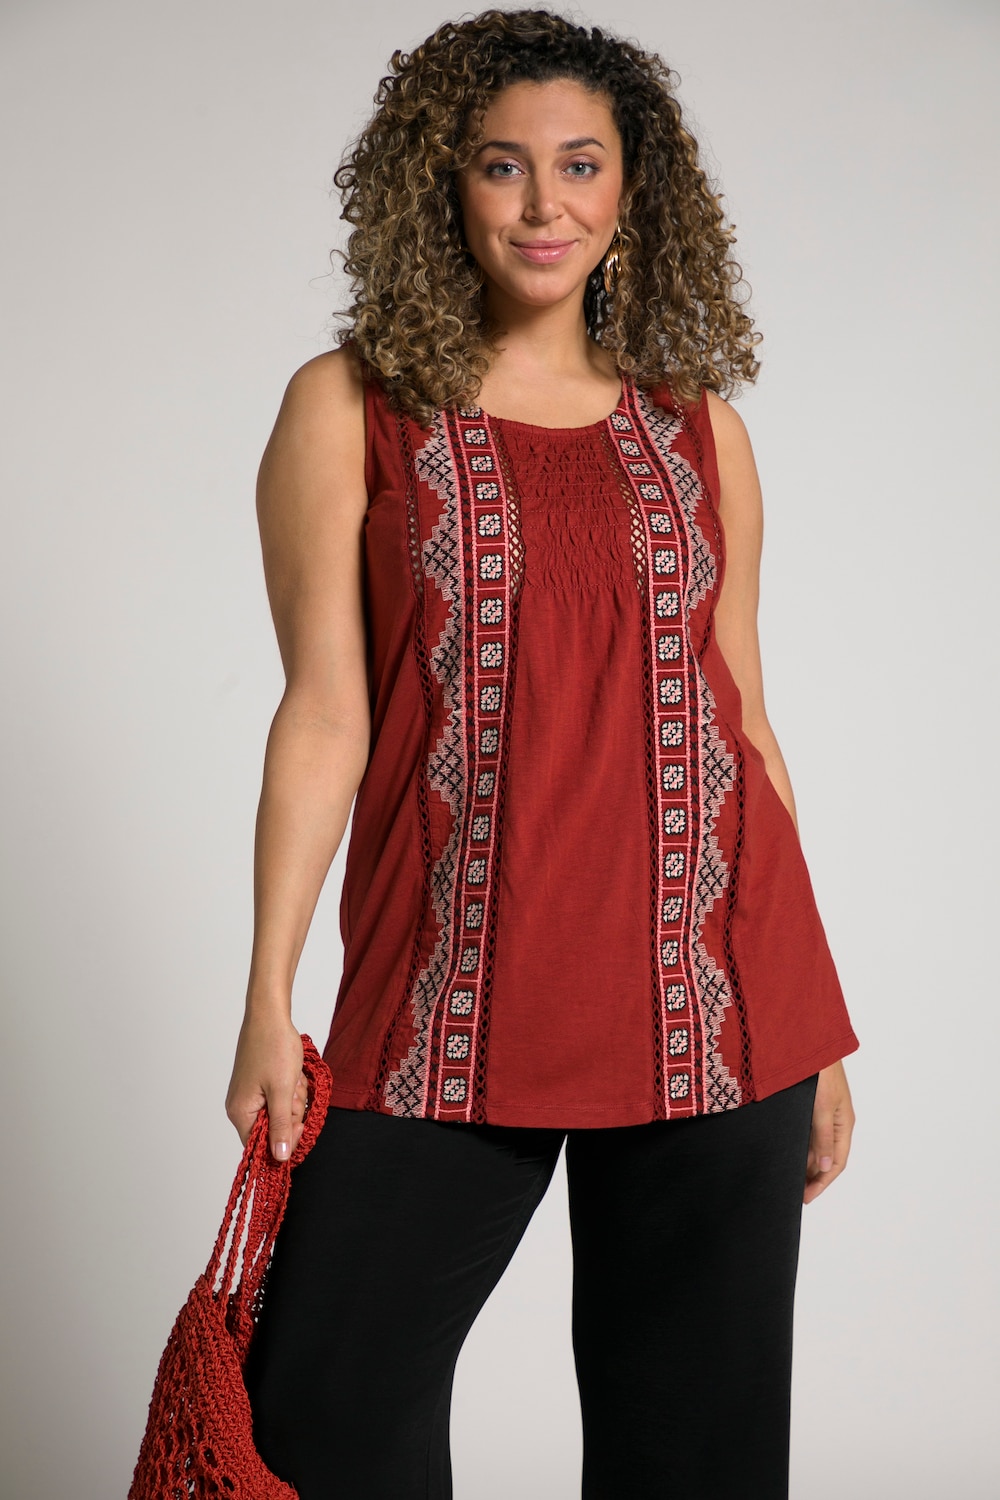 Plus Size Charming Details Embroidery Cotton Knit Tank, Woman, red, size: 20/22, cotton, Ulla Popken